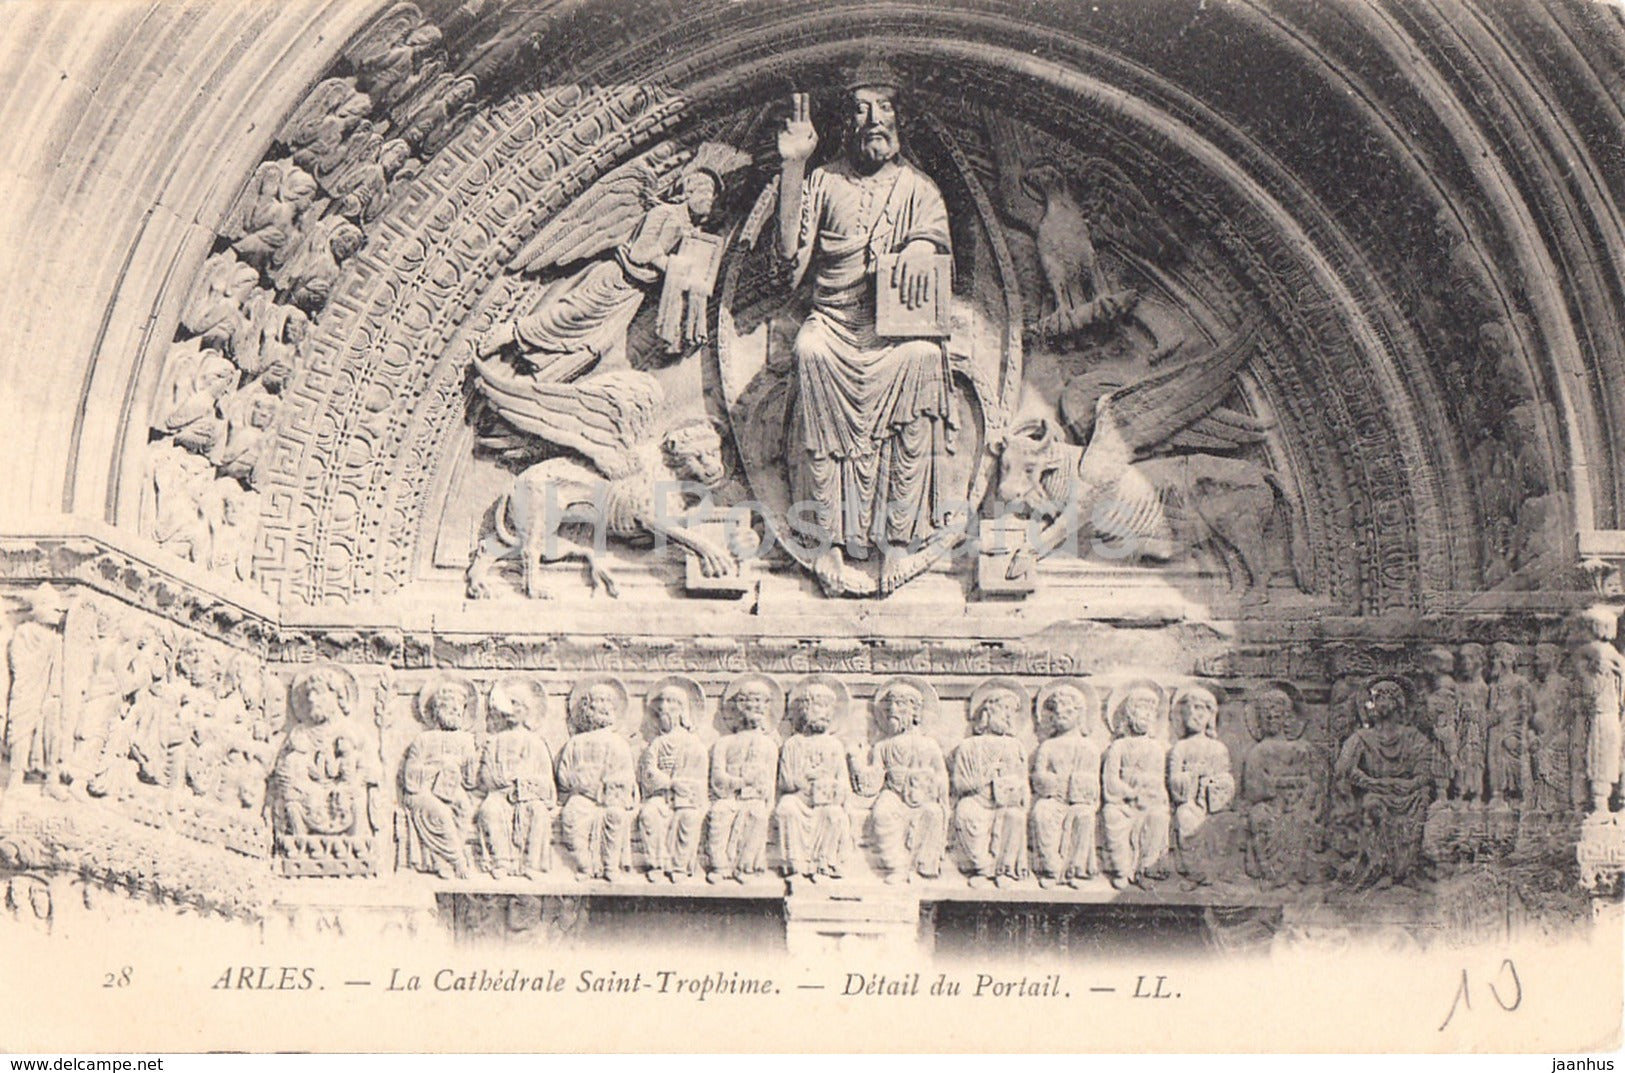 Arles - La Cathedrale Saint Trophime - Detail du Portail - cathedral - 28 - old postcard - France - unused